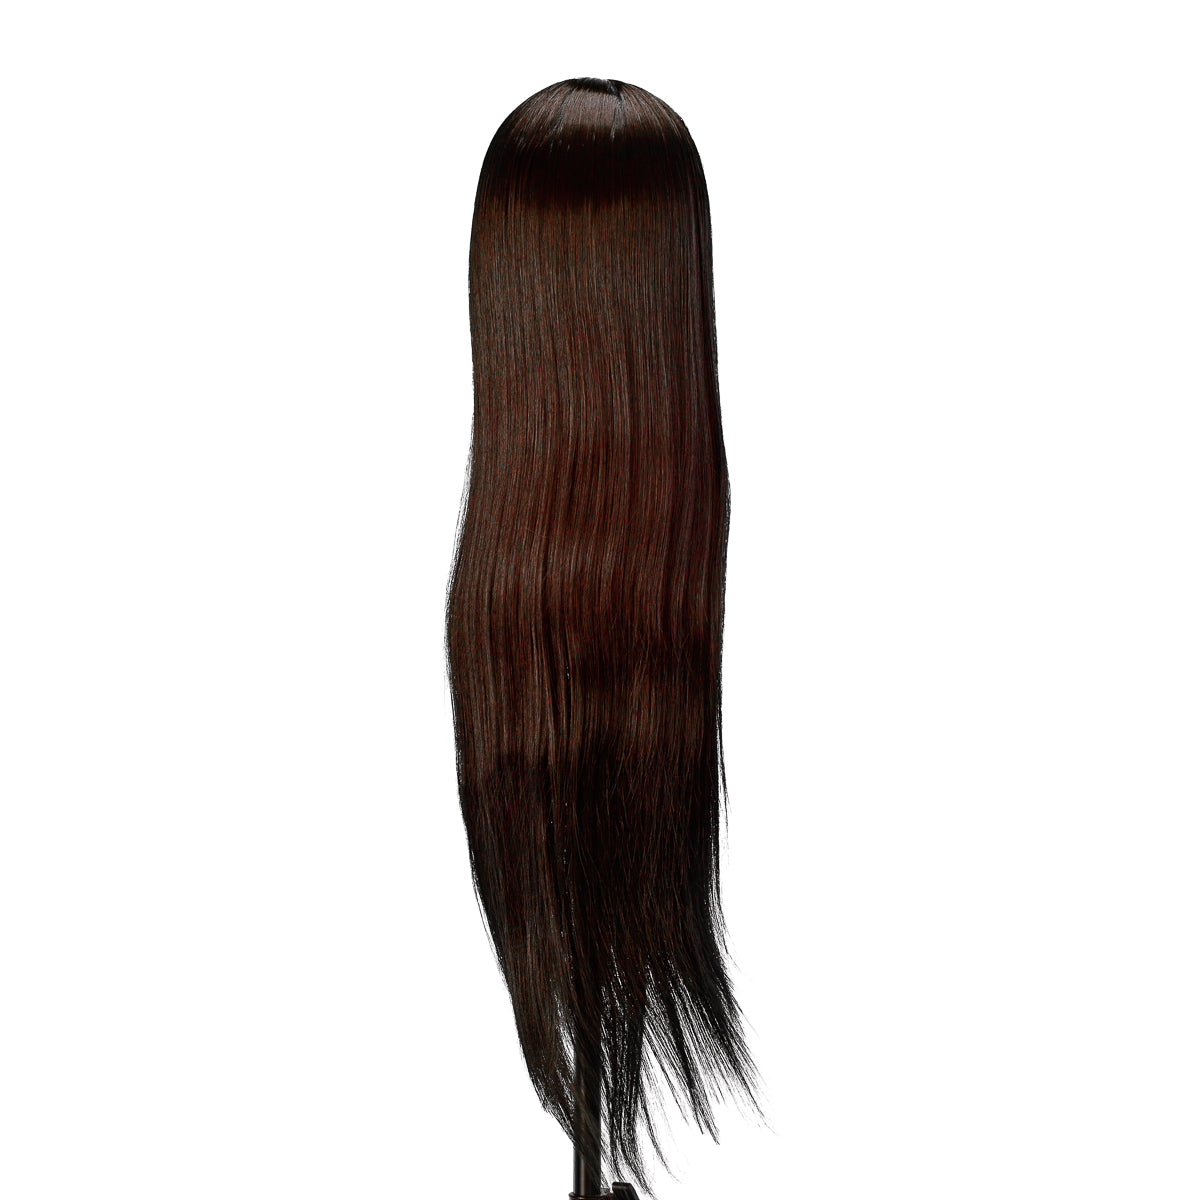 Gabbiano WZ2 Hairdressing Training Head, Synthetic Hair, Colour 4#, Length 24"